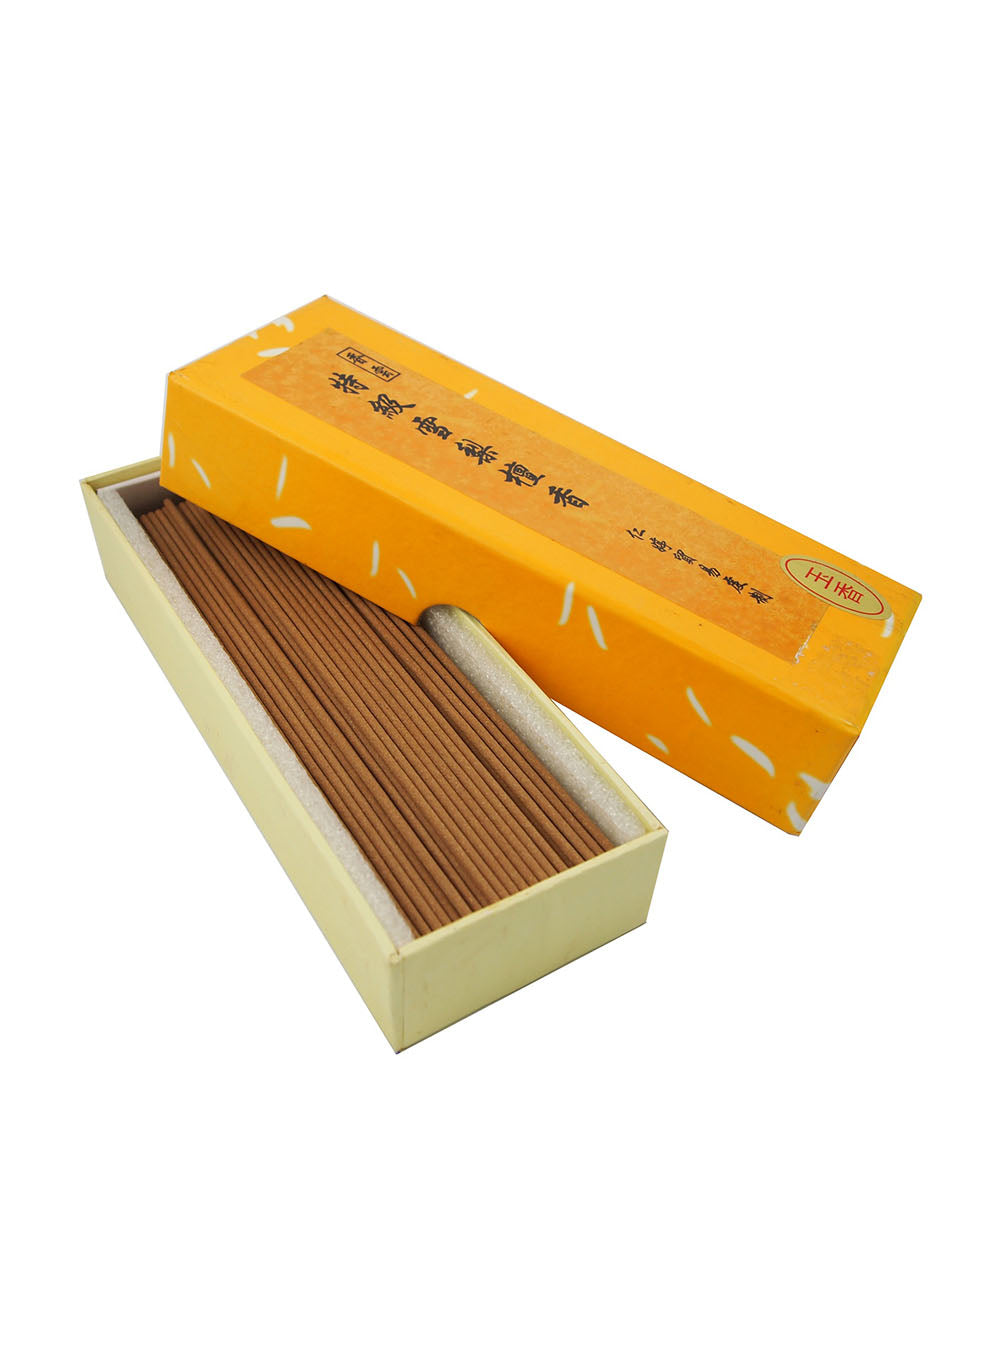 Ren Ting Premium Sydney Sandalwood Incense Sticks (30mins)